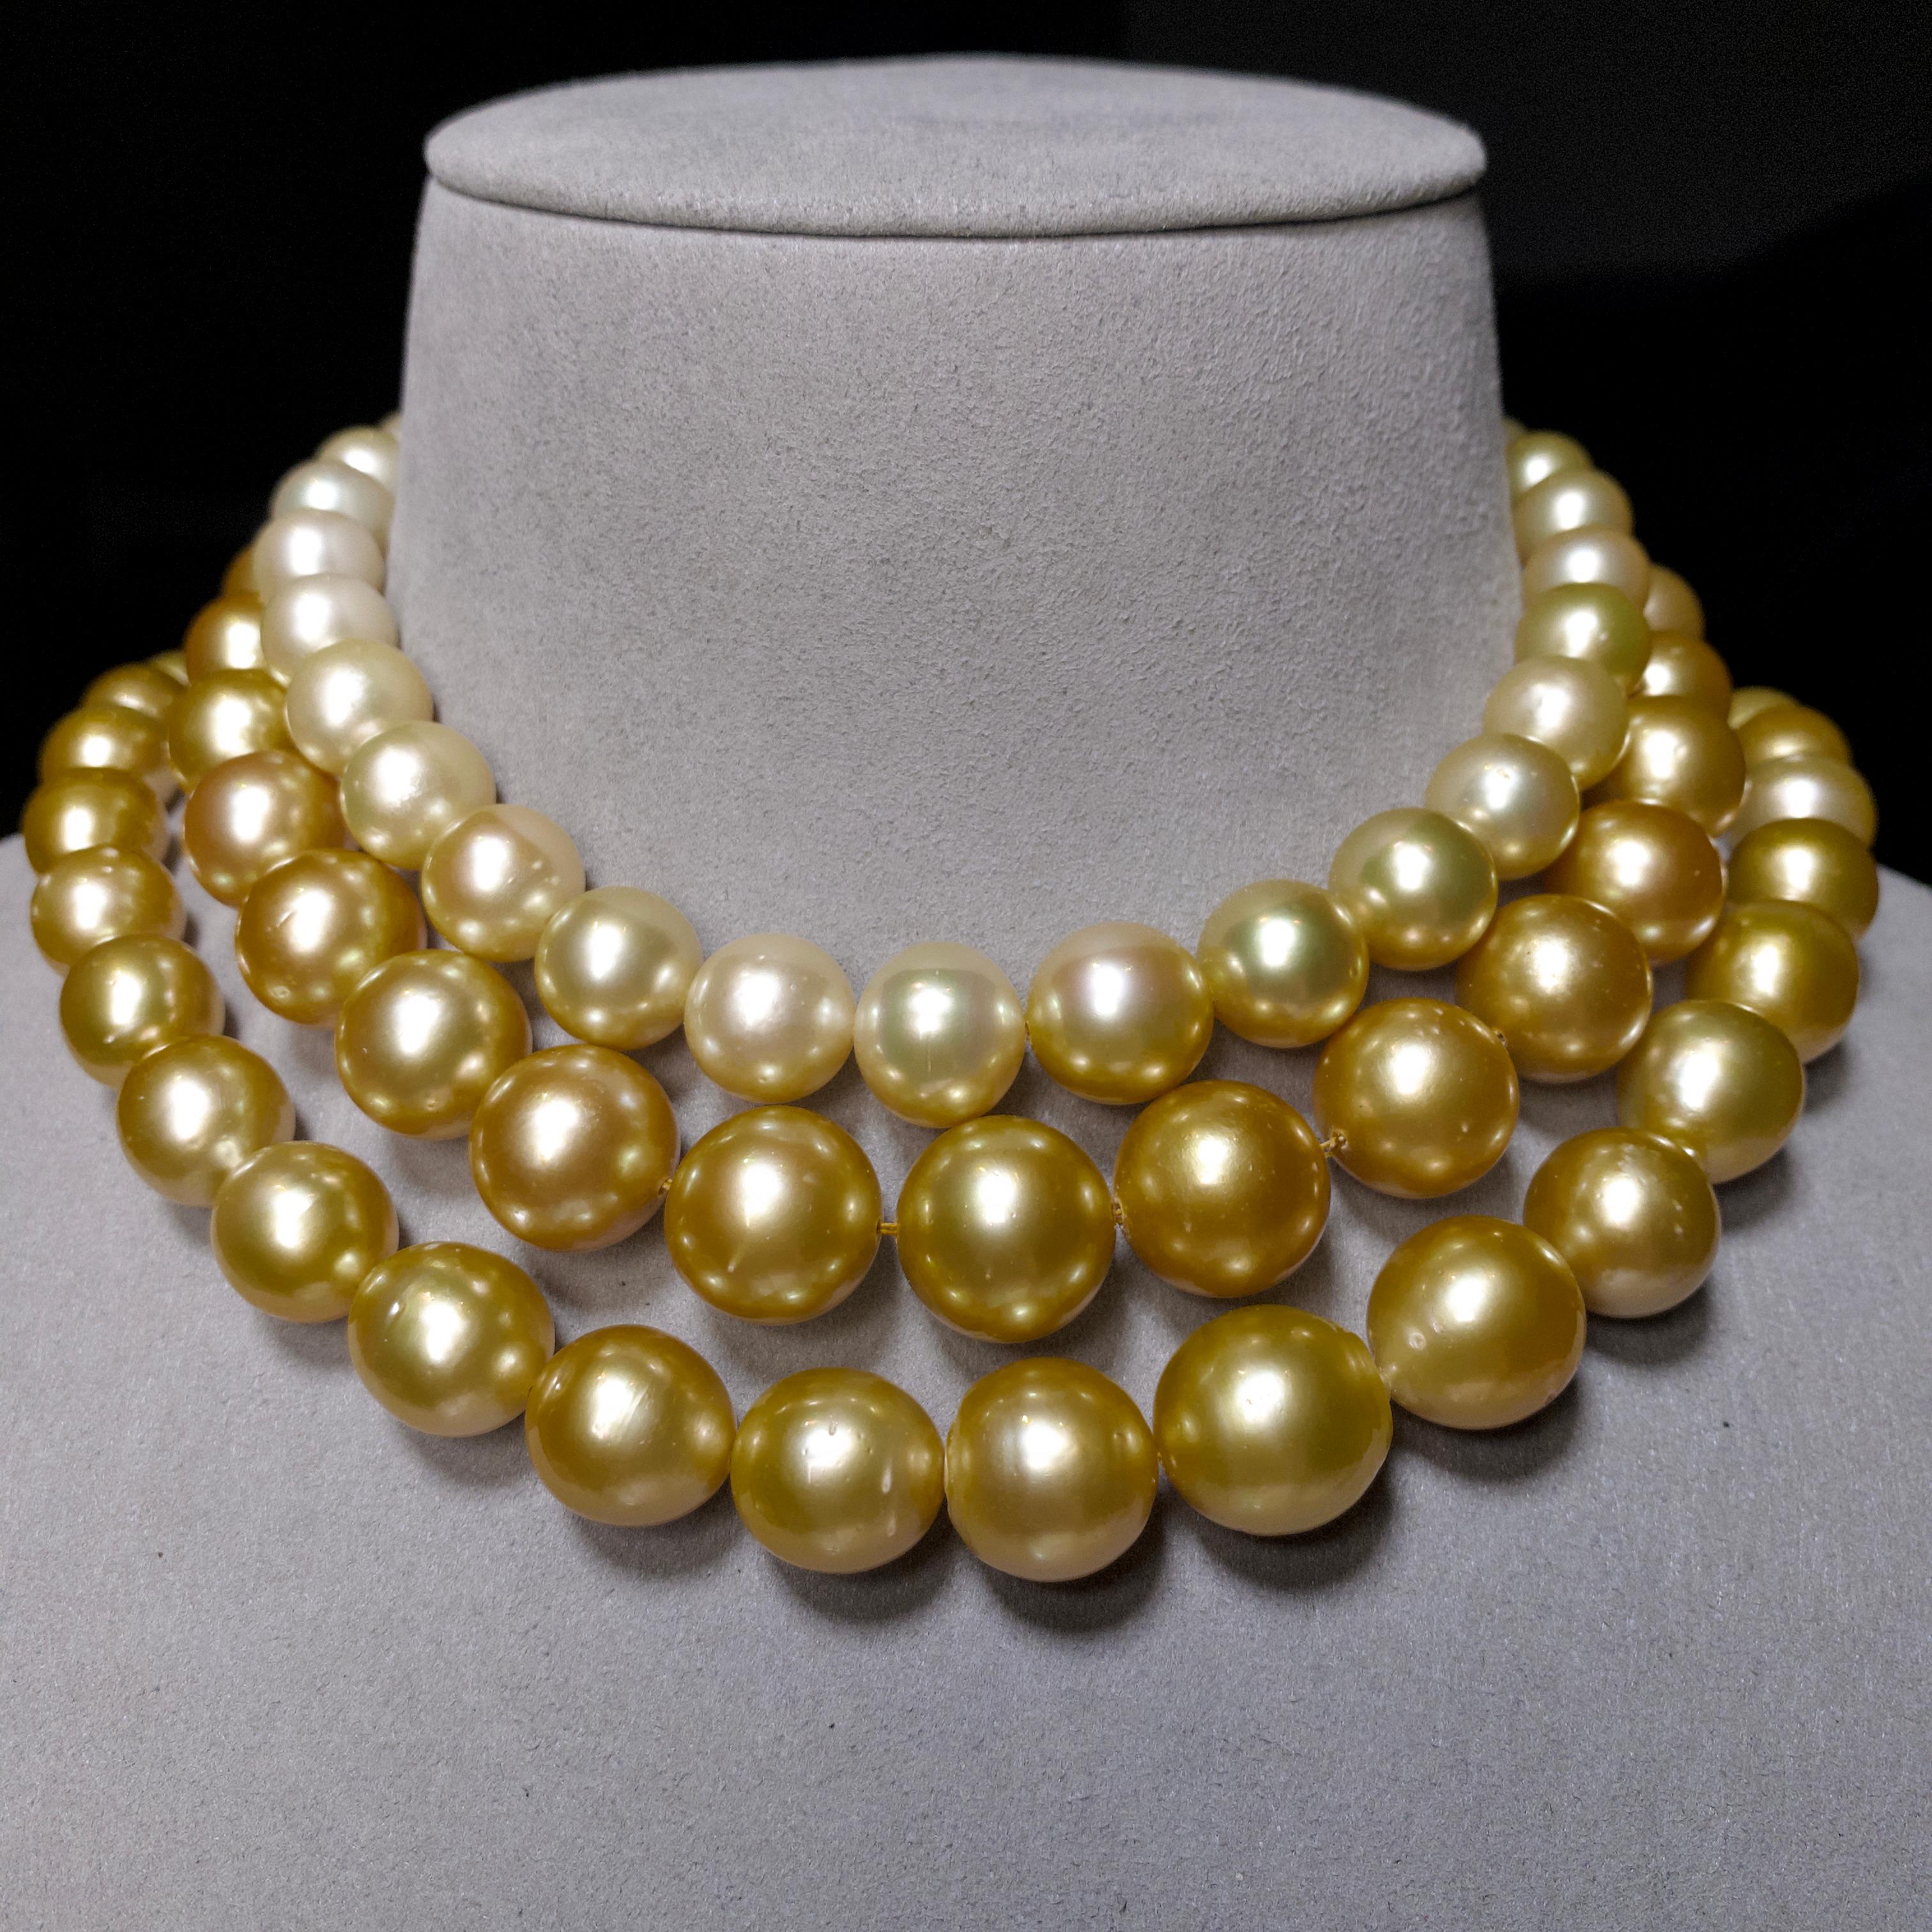 yellowed pearls